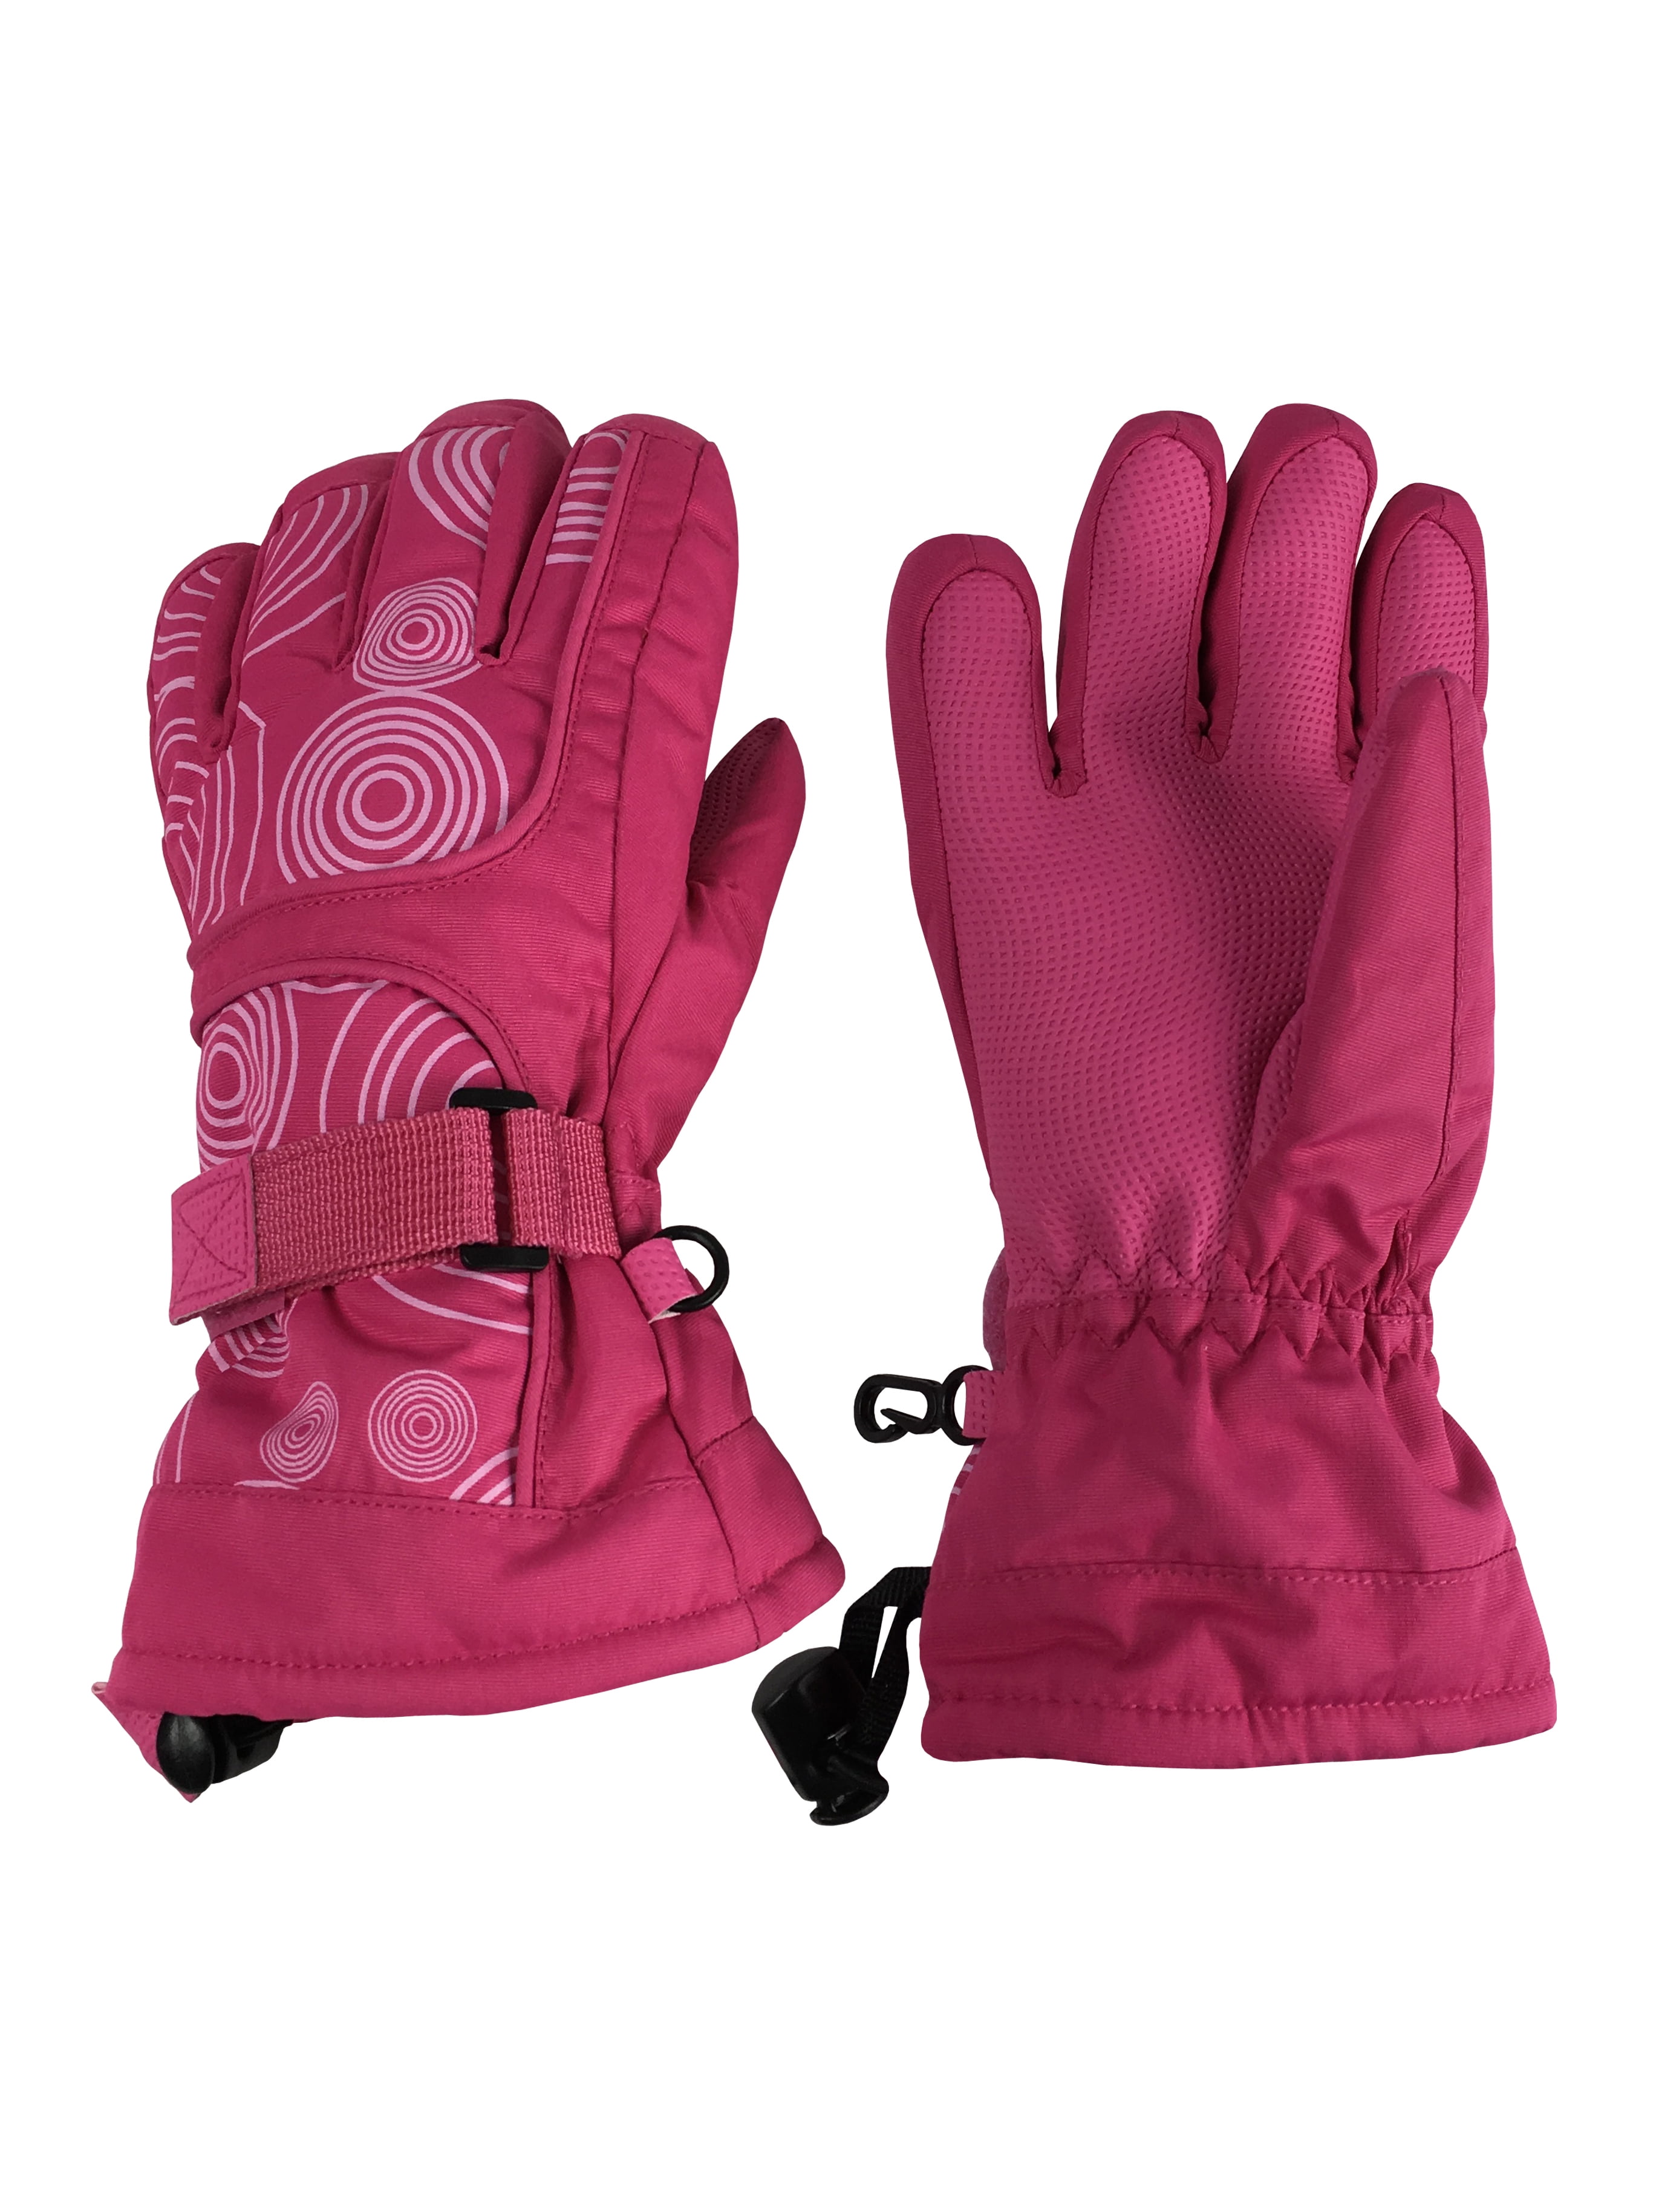 Azarxis Kids Waterproof Ski Snowboard Gloves Children Winter Thermal Warm Snow Gloves with Zipper Pocket for Boys Girls